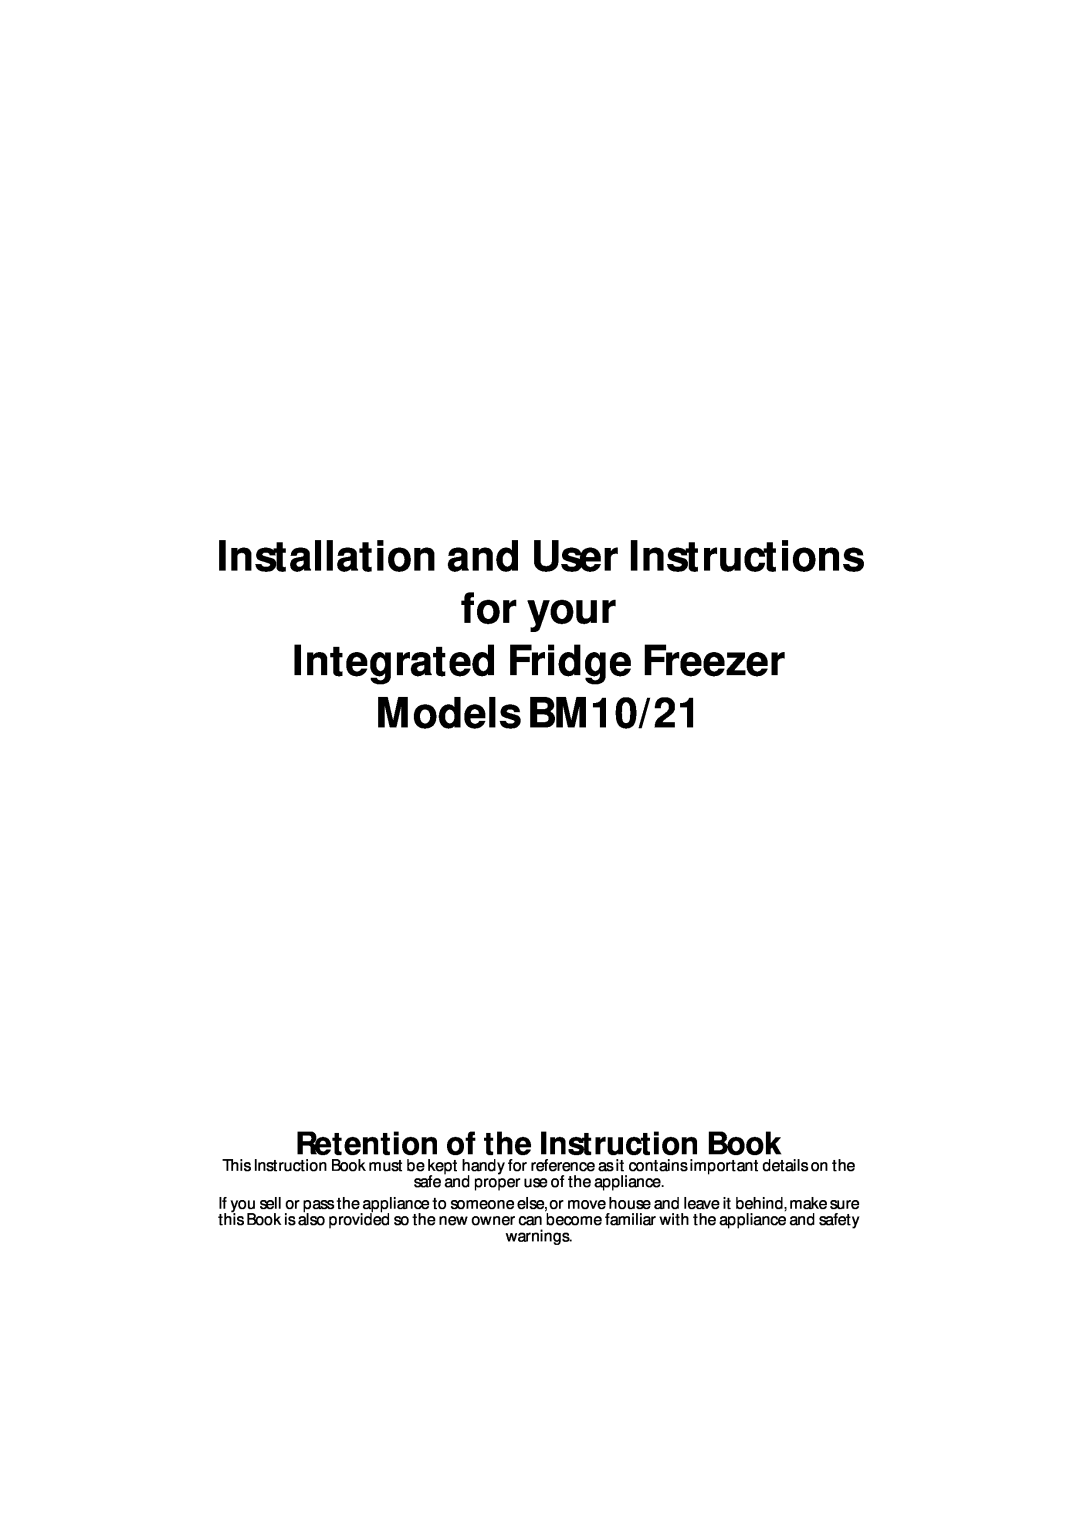 Hotpoint BM21 manual Retention of the Instruction Book, Models BM10/21 